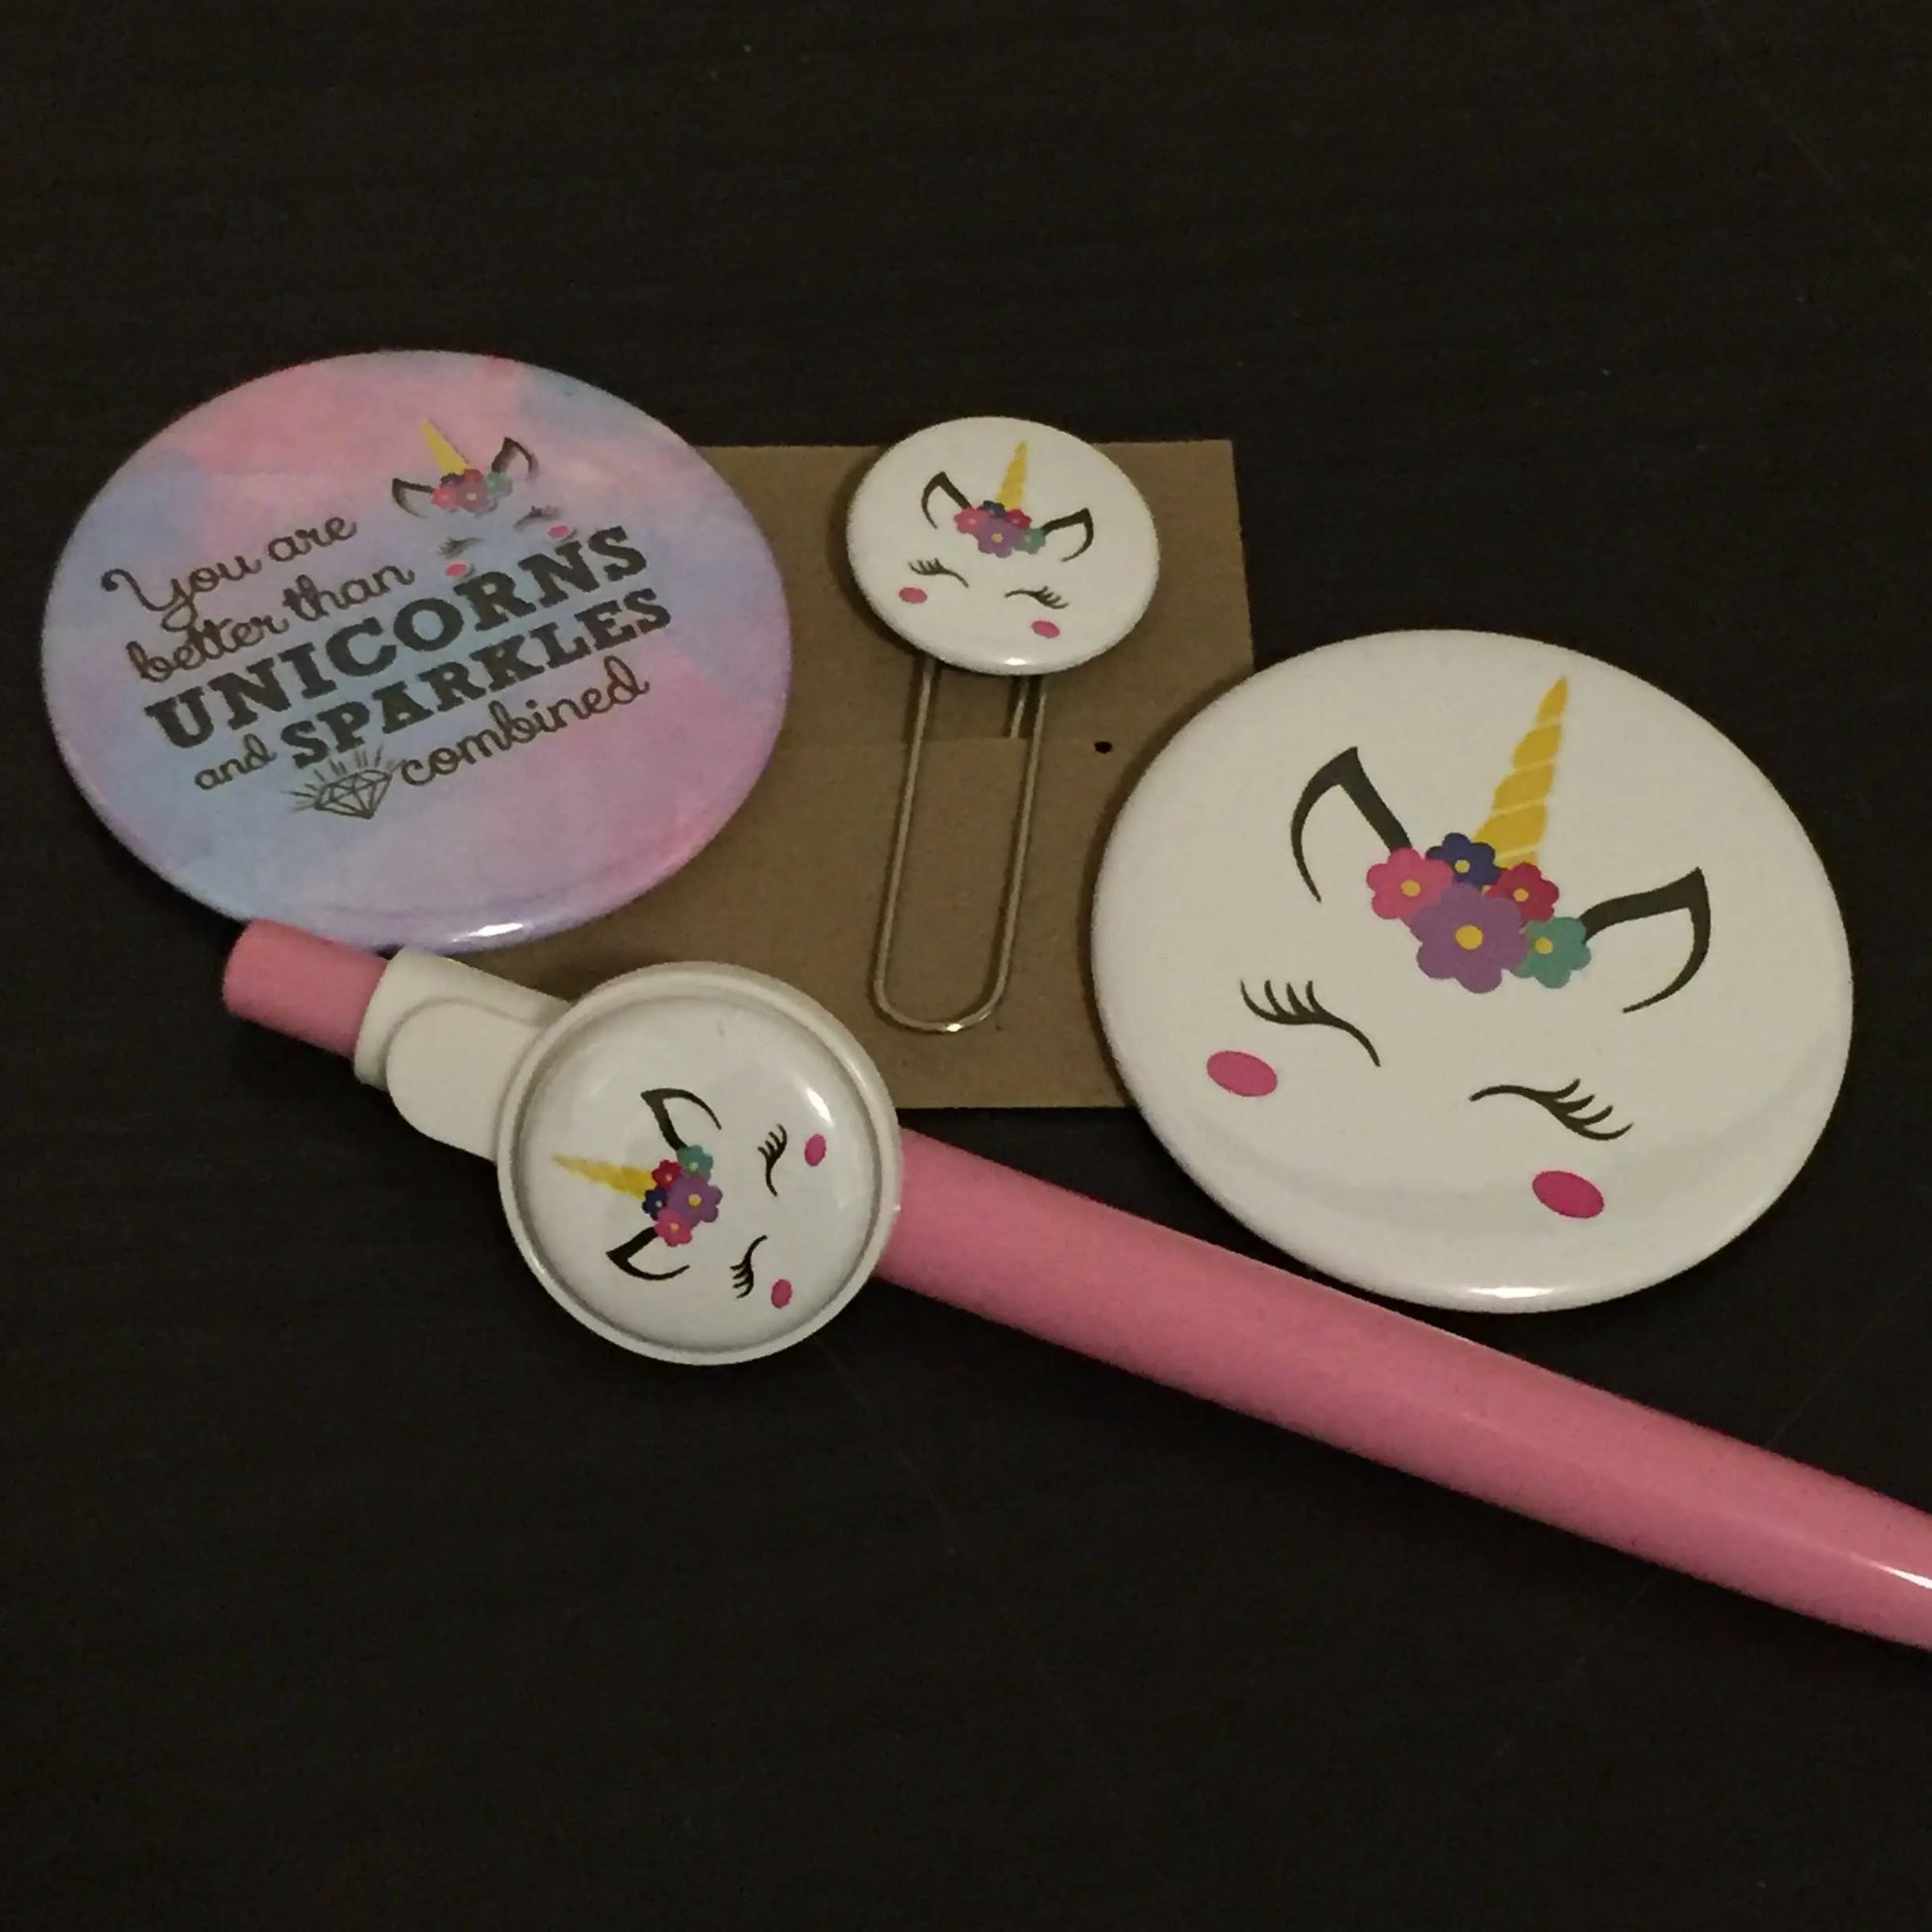 Unicorn Latte - Sparkle - Magic - Gift for Girls - Unicorns Party Custom Button Pins -  Coffee - Fantasy Theme Gift Ideas - 10 pieces